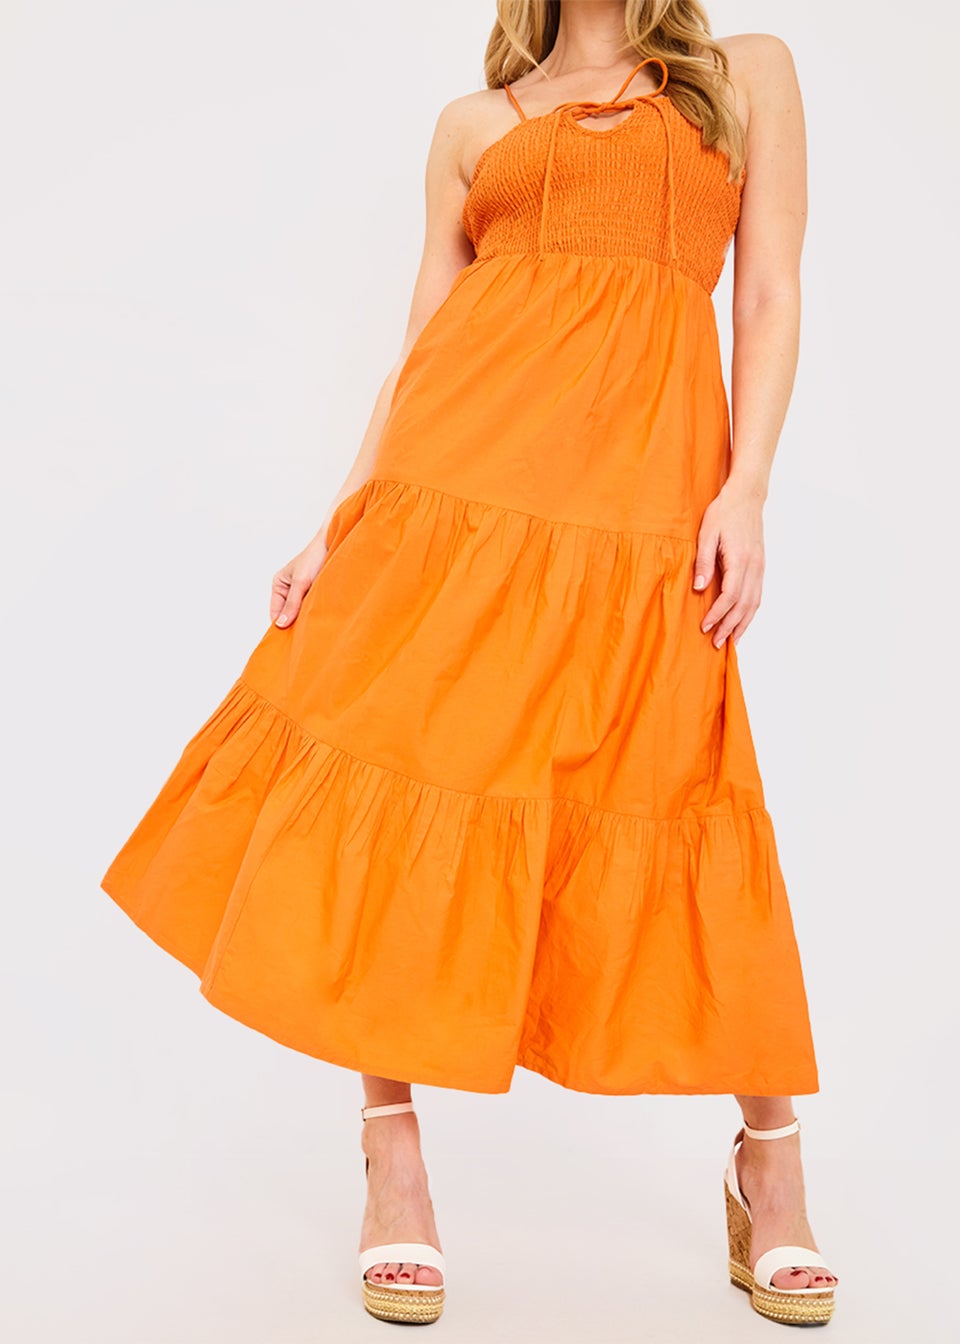 In the Style Jac Jossa Orange Halter Neck Midaxi Dress